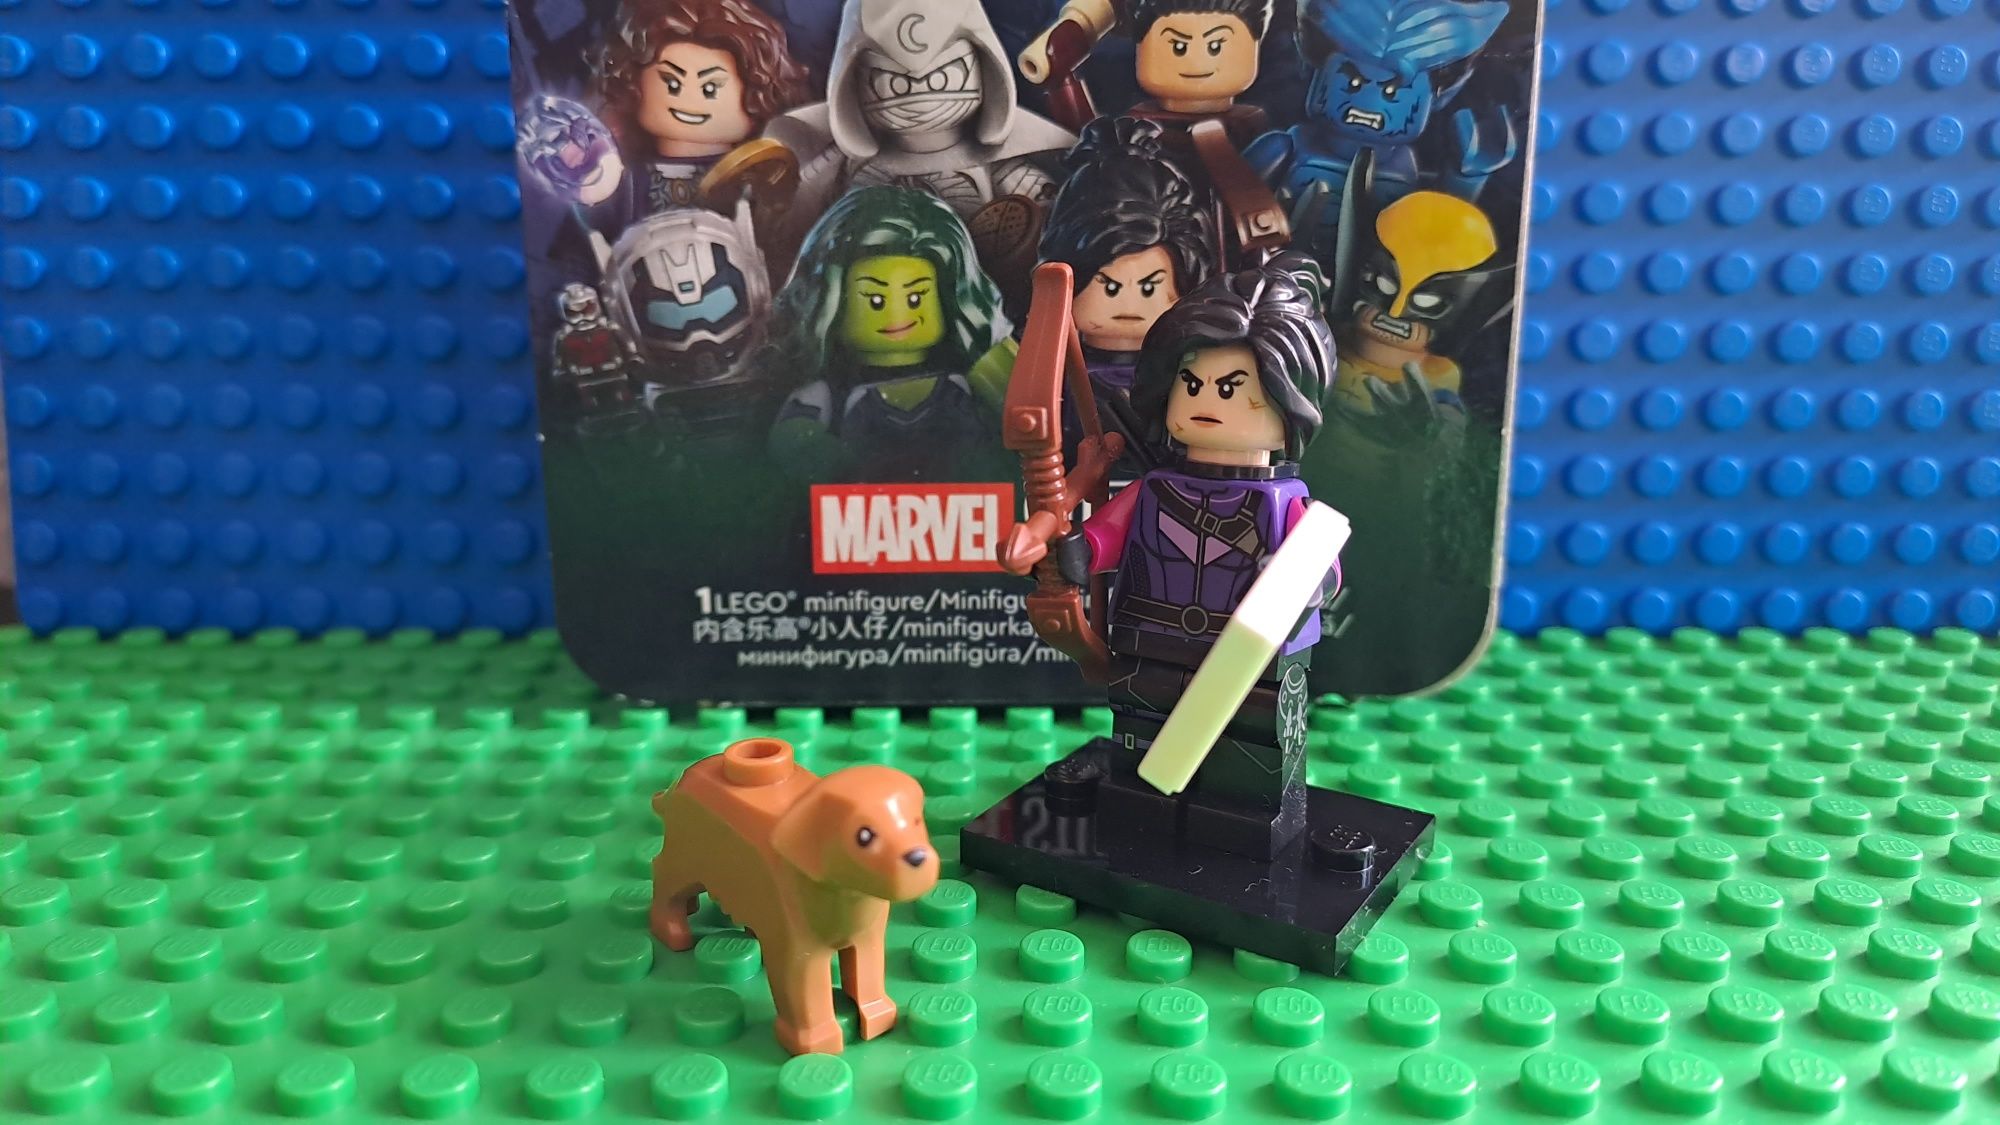 Lego minifigures Marvel Studios series 2: Kate Bishop

colmar2 - 7 - K